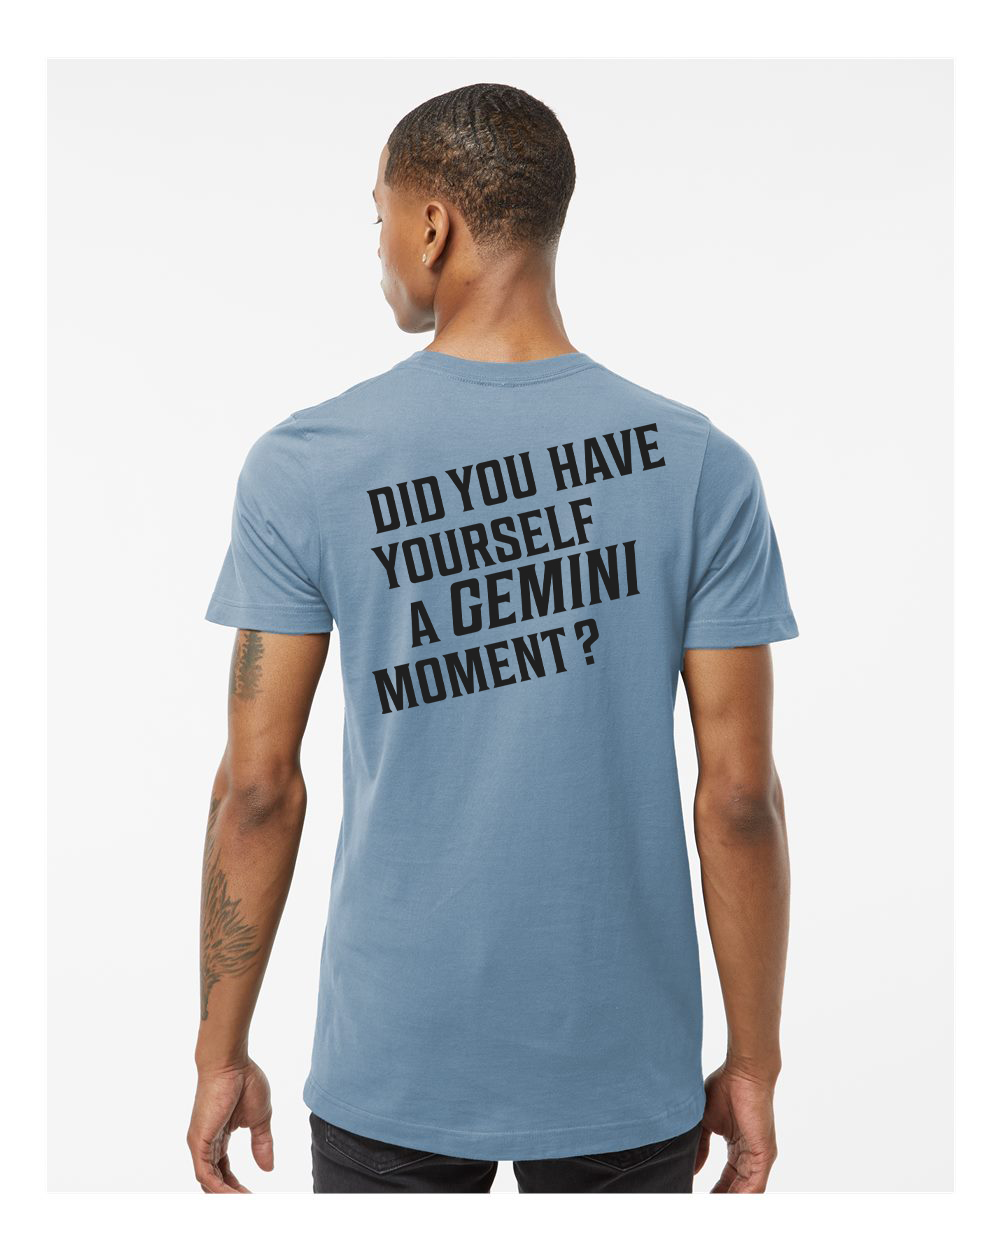 Gemini Moment T-Shirts